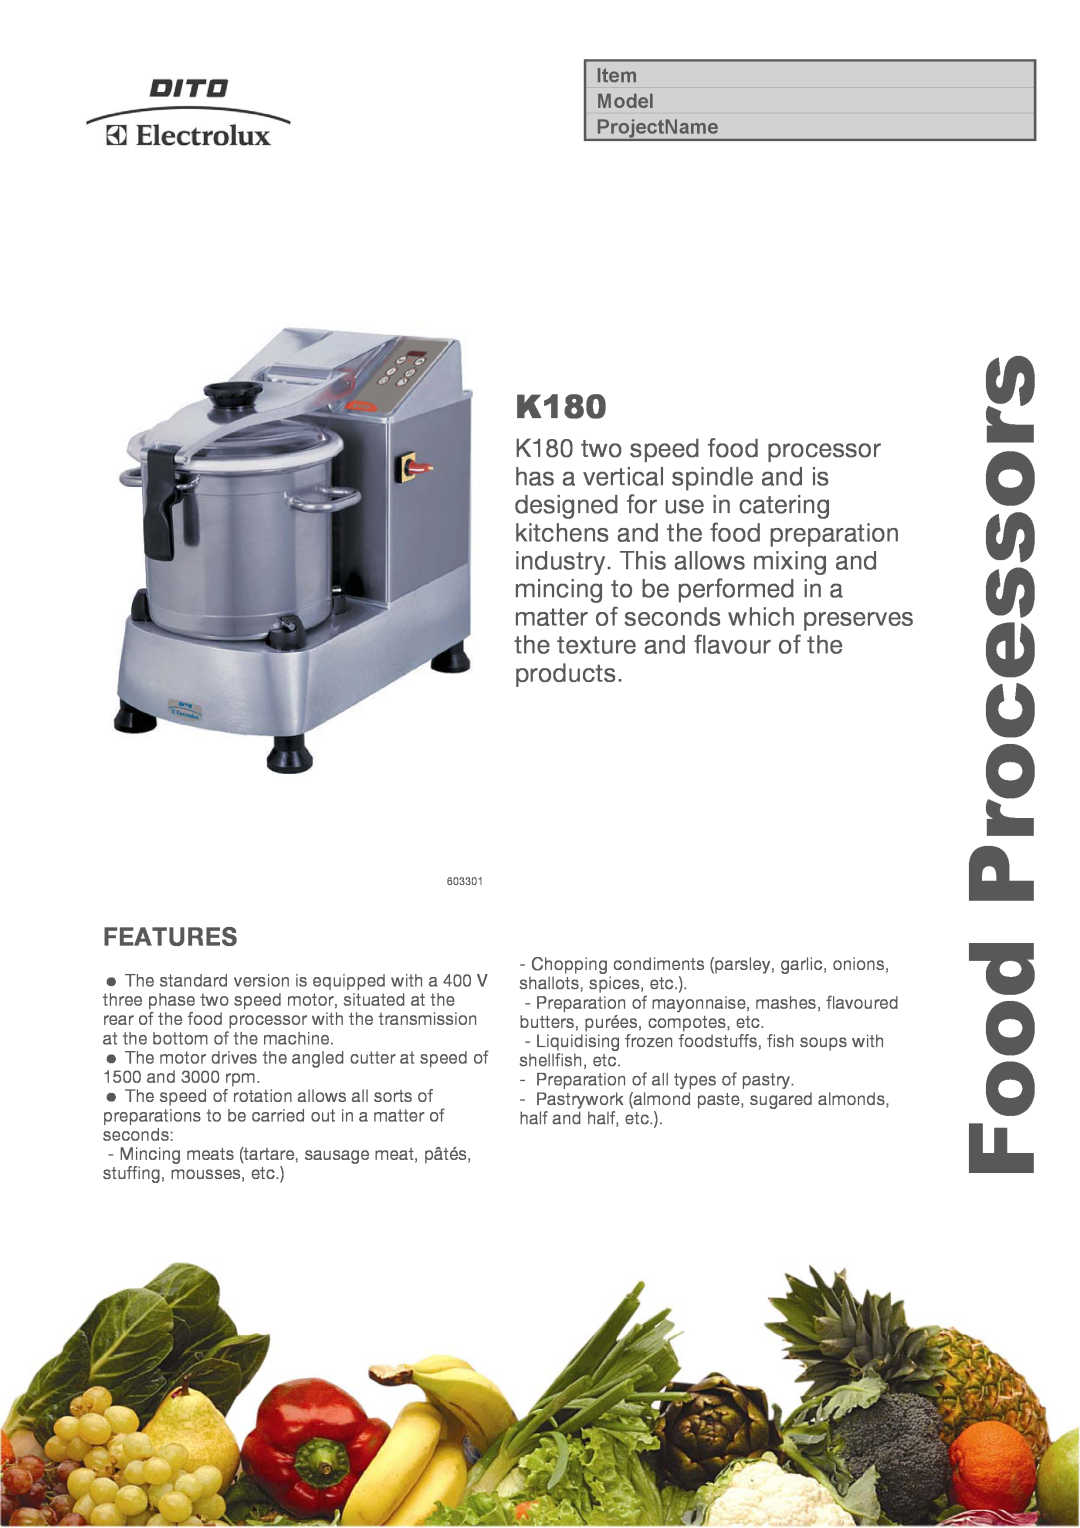 Electrolux K180F385, K180FSR385 manual Features, Processors, Food, Model ProjectName 